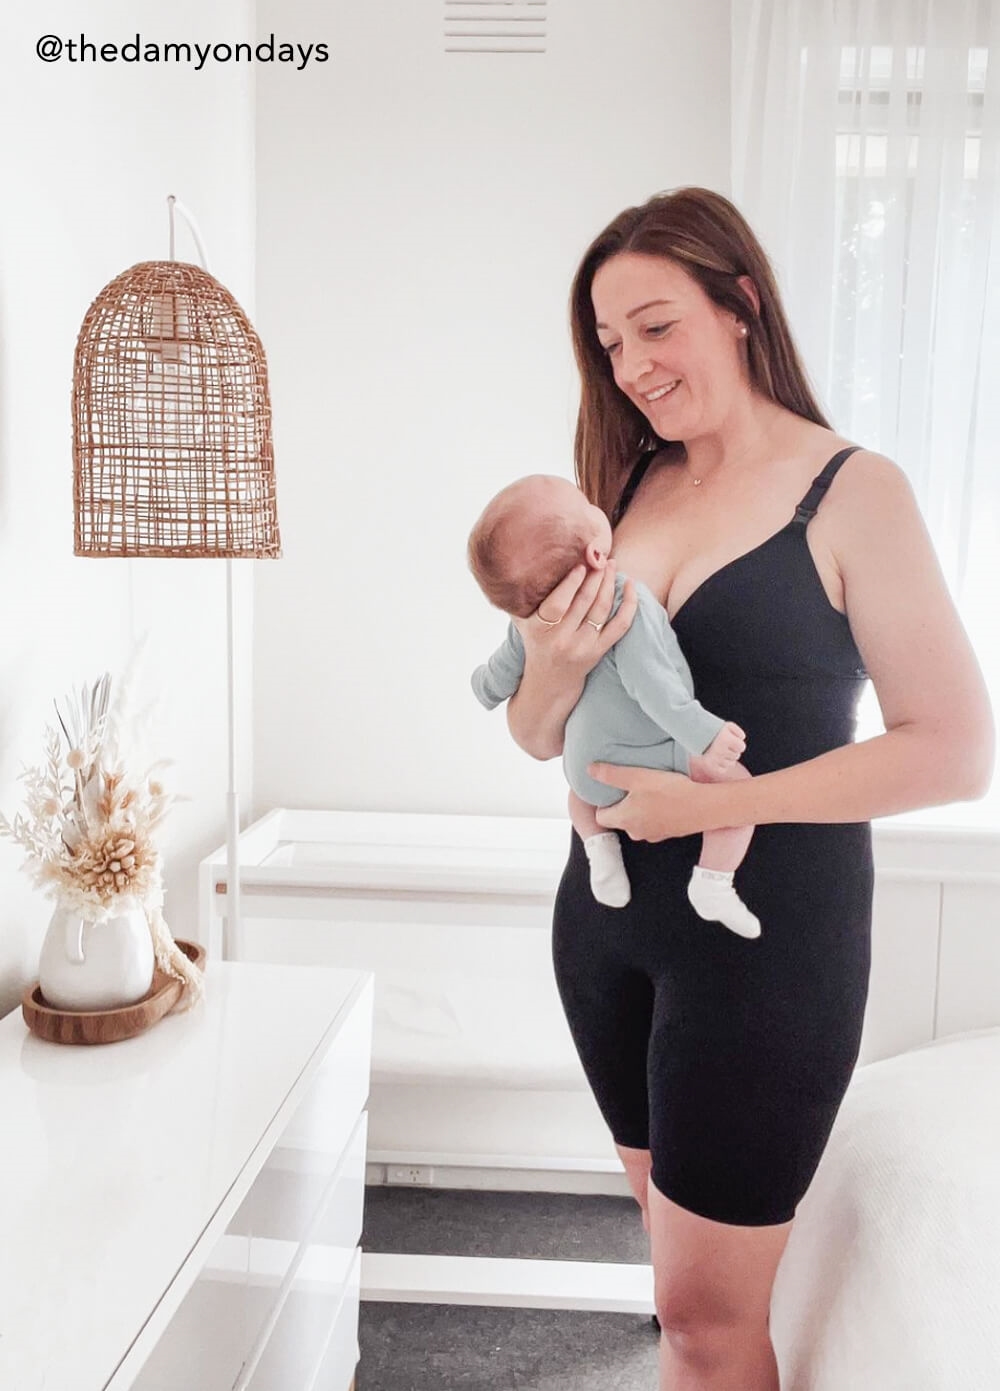 Lorna Jane - Lorna Jane maternity/ nursing bra on Designer Wardrobe